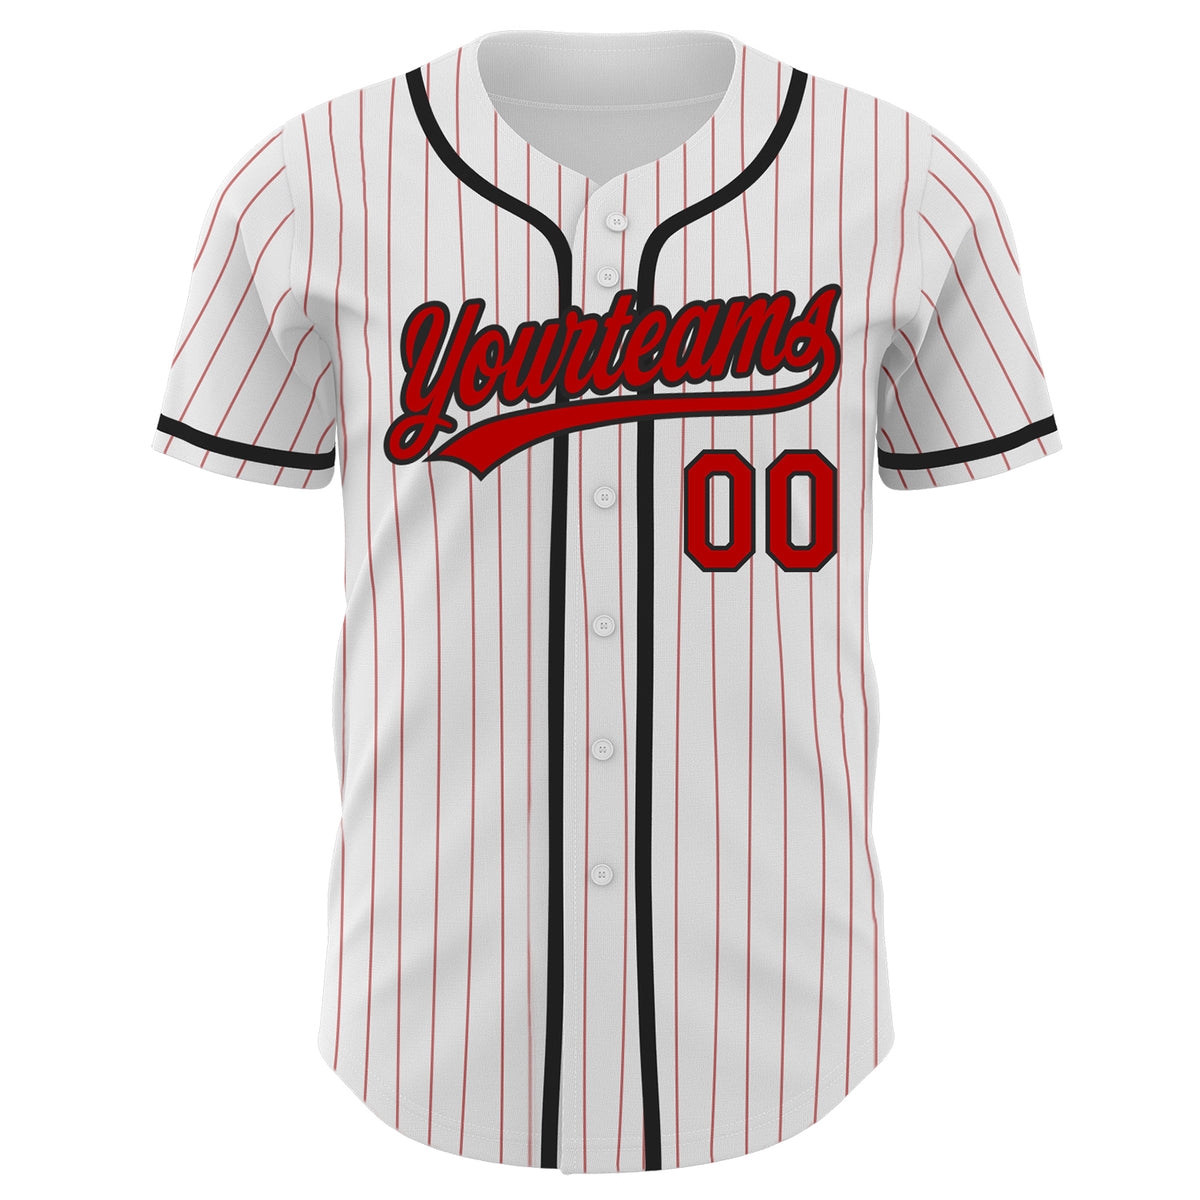 red striped baseball jersey